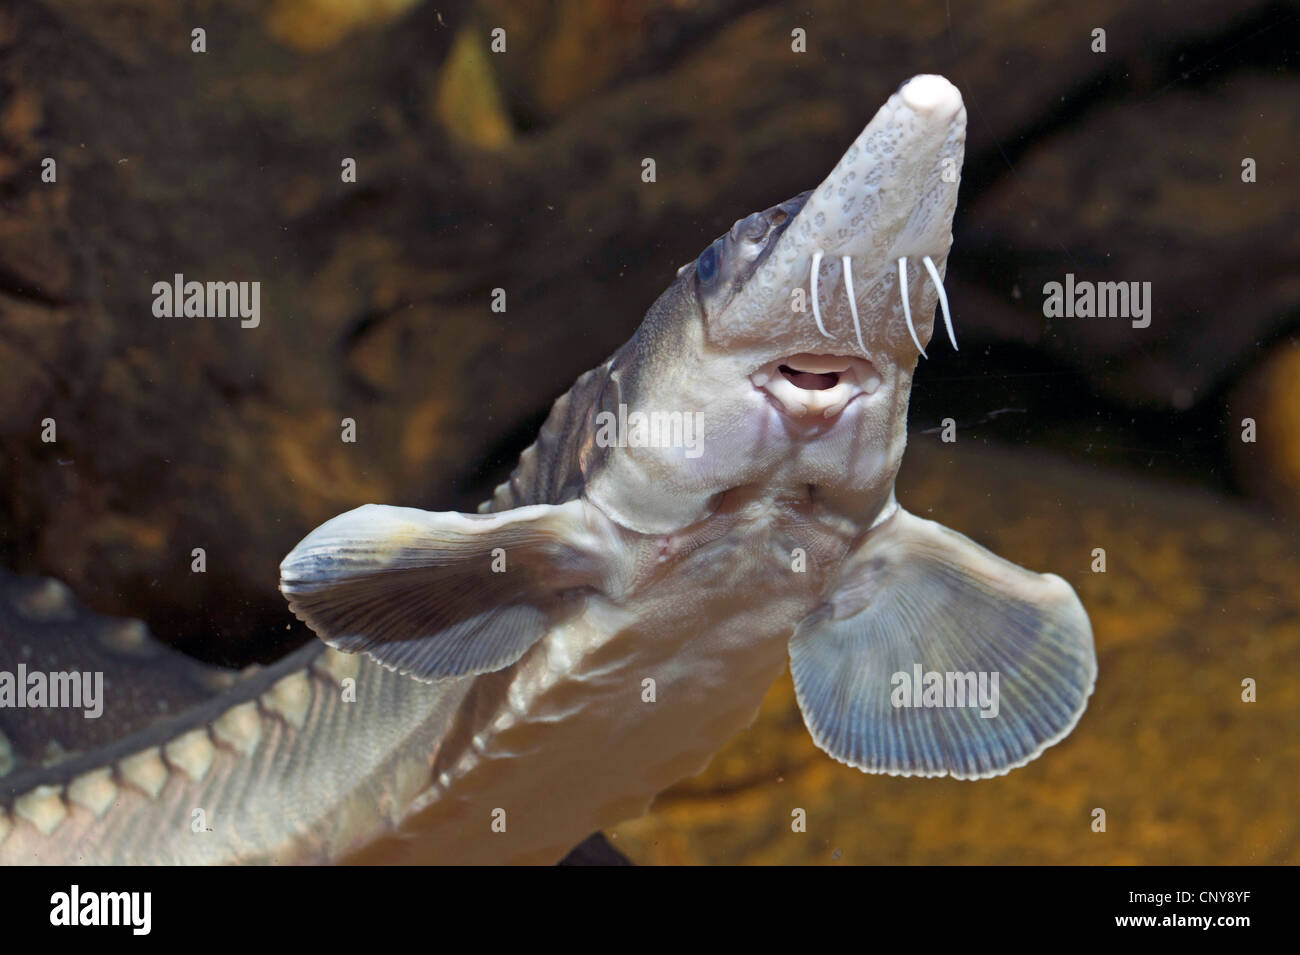 Atlantic sturgeon (Acipenser oxyrhynchus), portrait fish from below Stock Photo